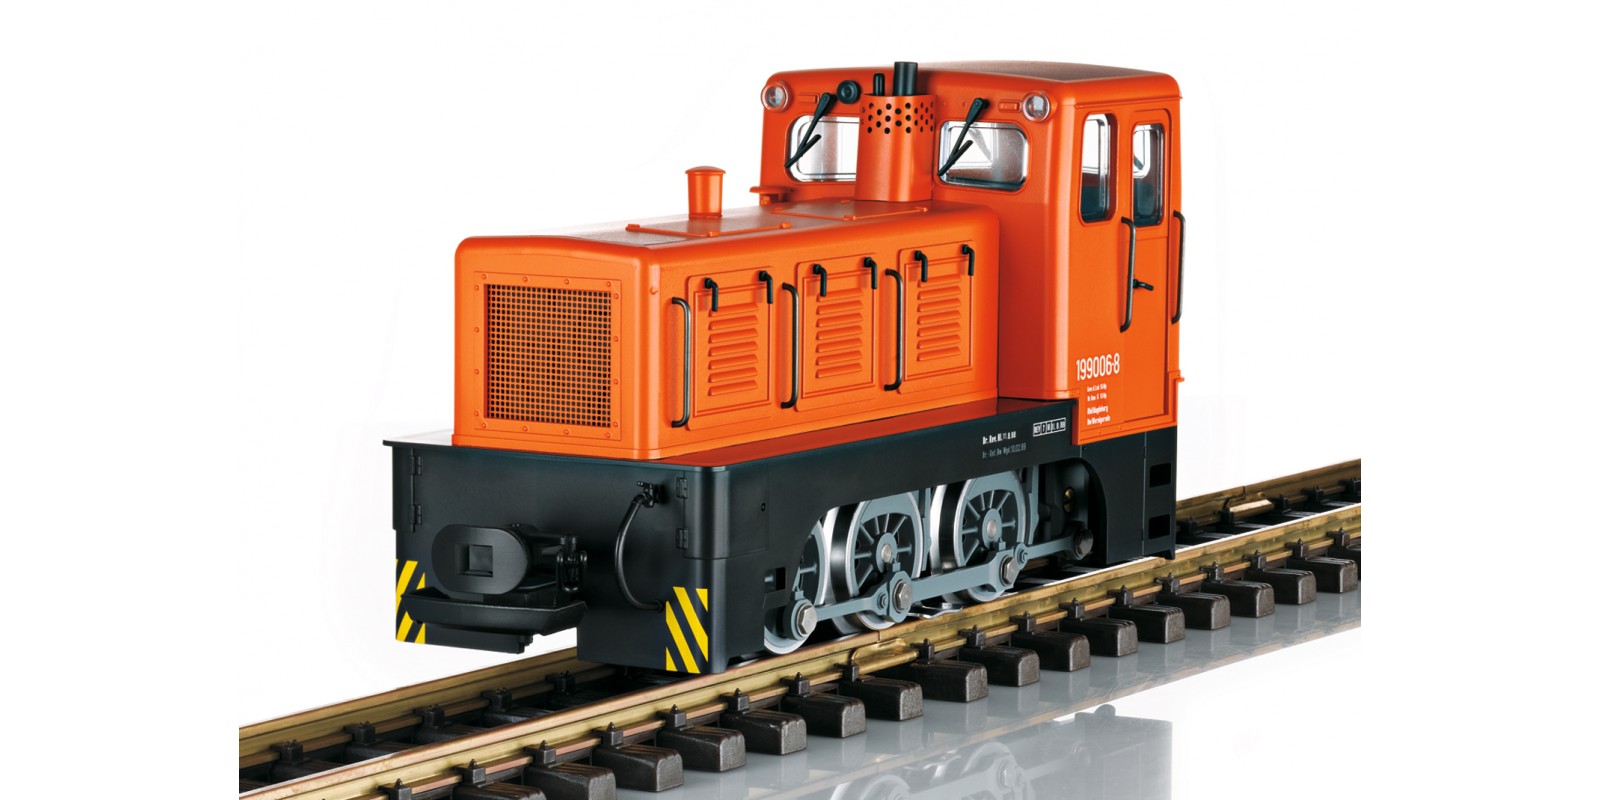 L20320 HSB Class V 10C Diesel Locomotive